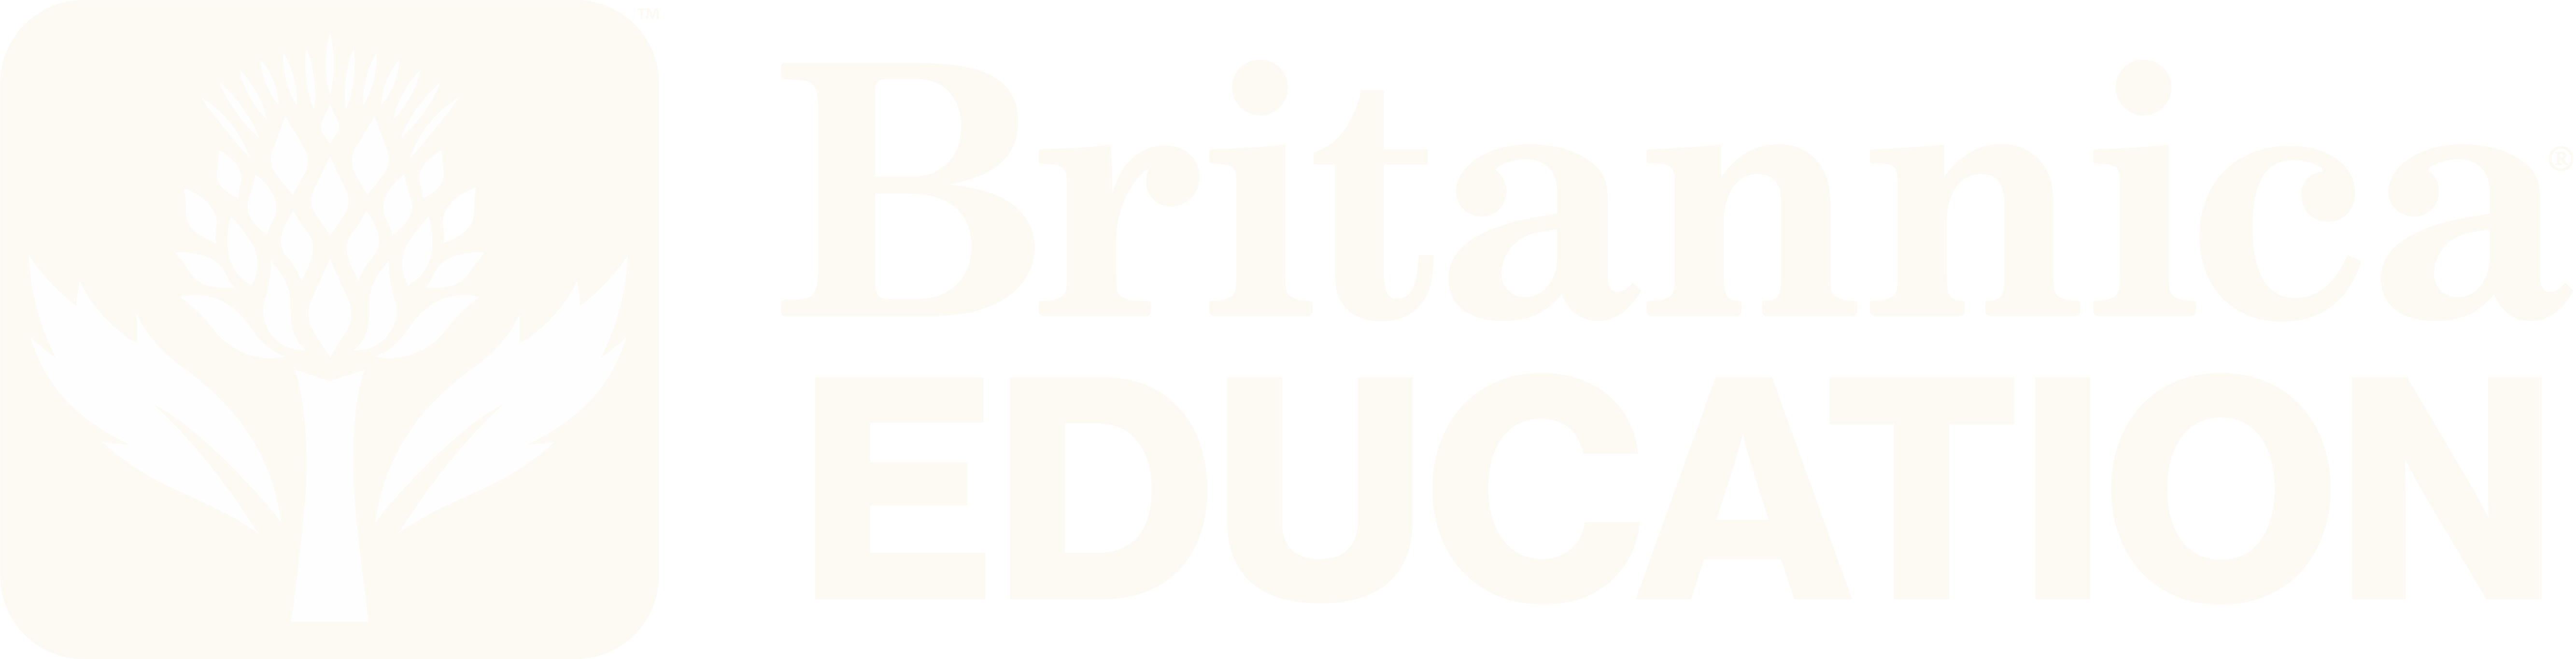 offwhite-britannica-education-logo